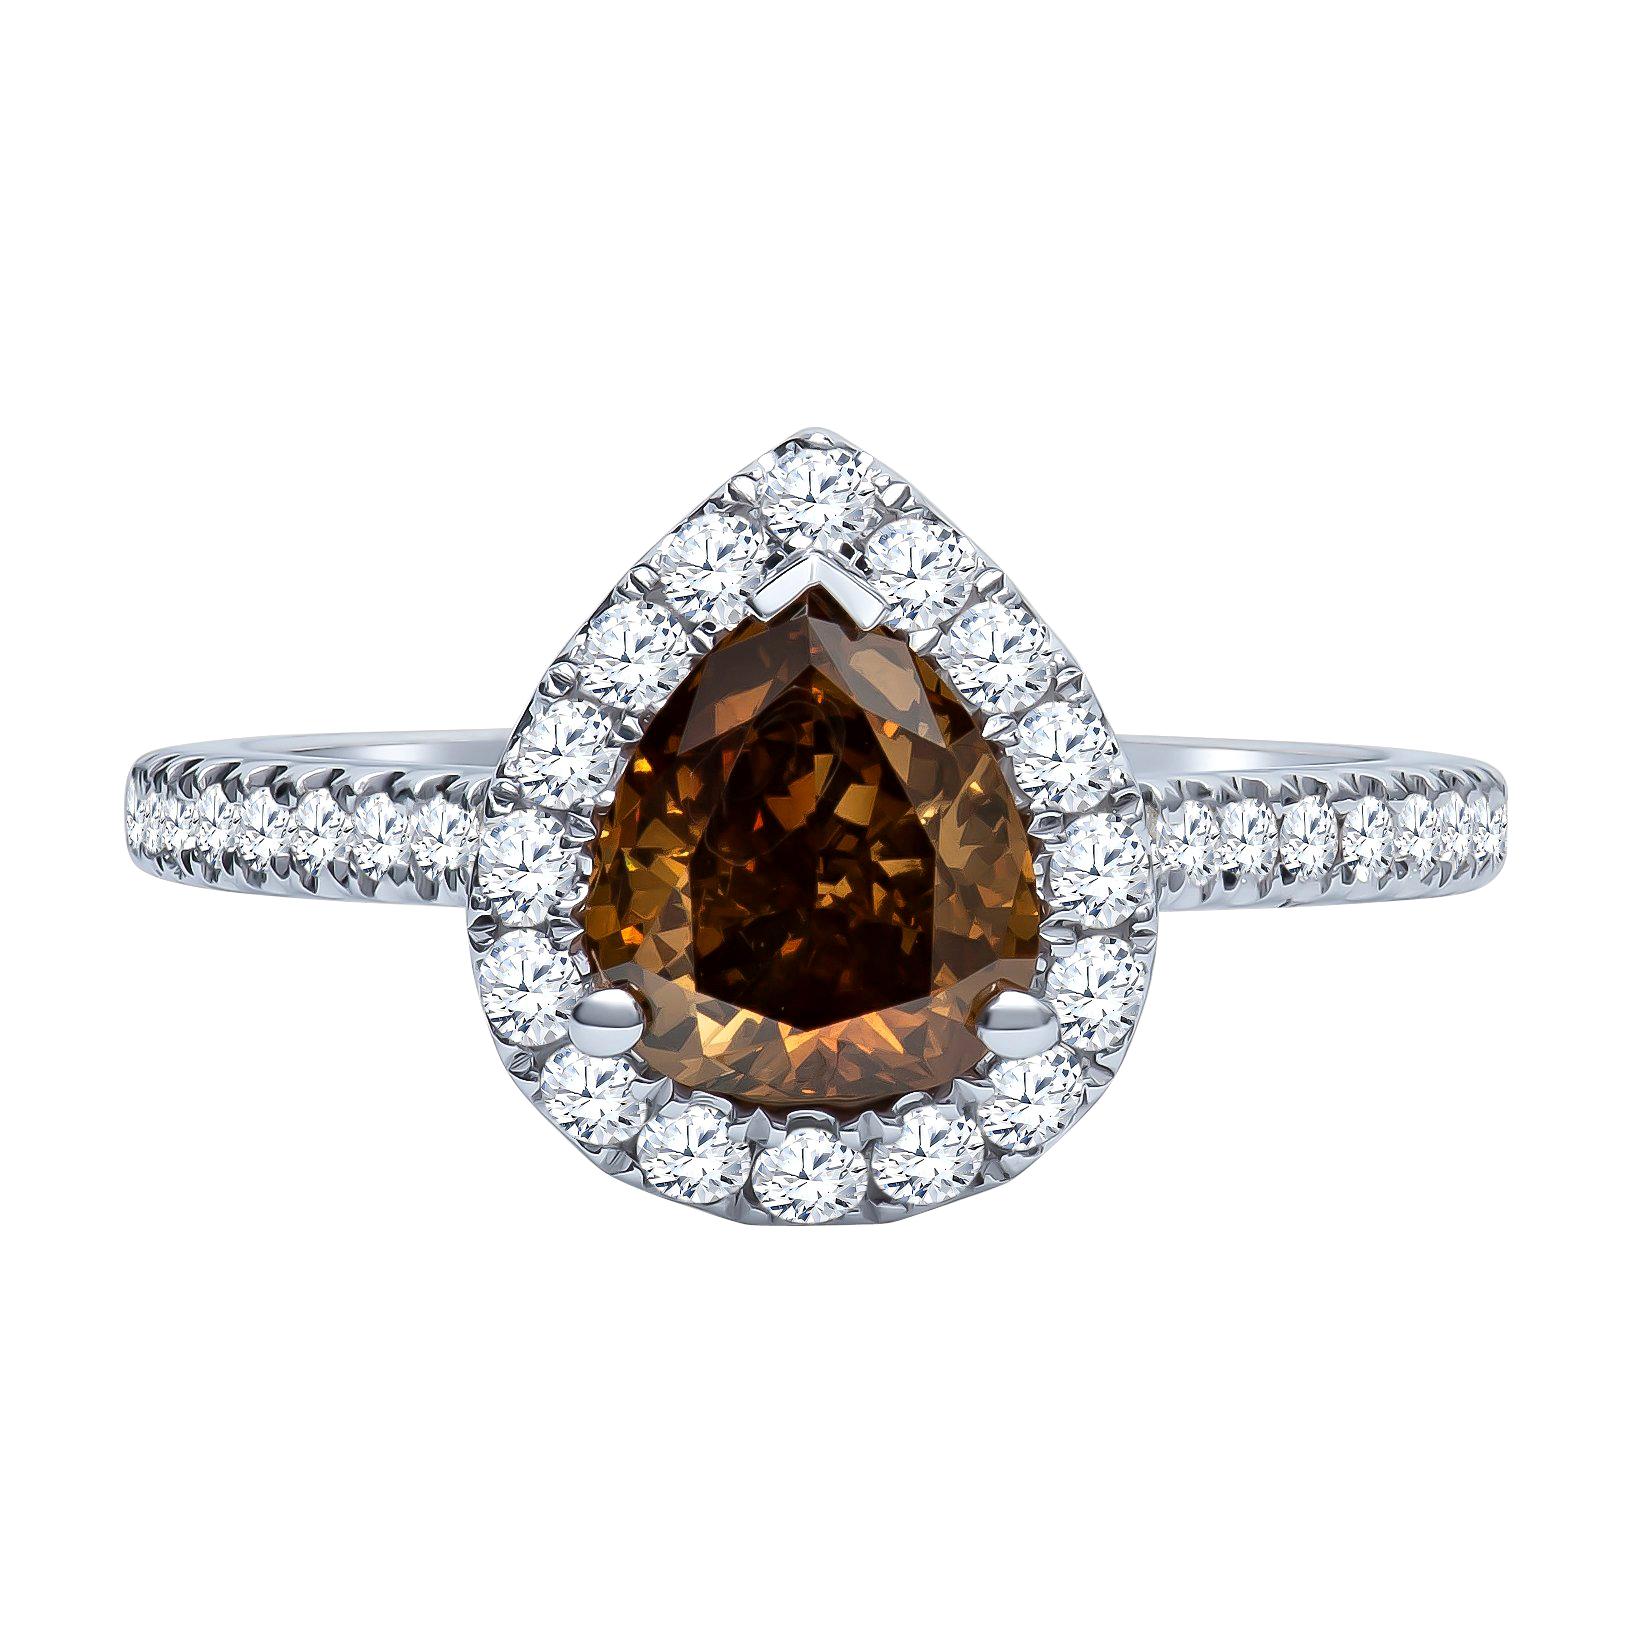 1.21 Carat Pear Shape Fancy Dark Yellow Brown Diamond Halo Engagement Ring